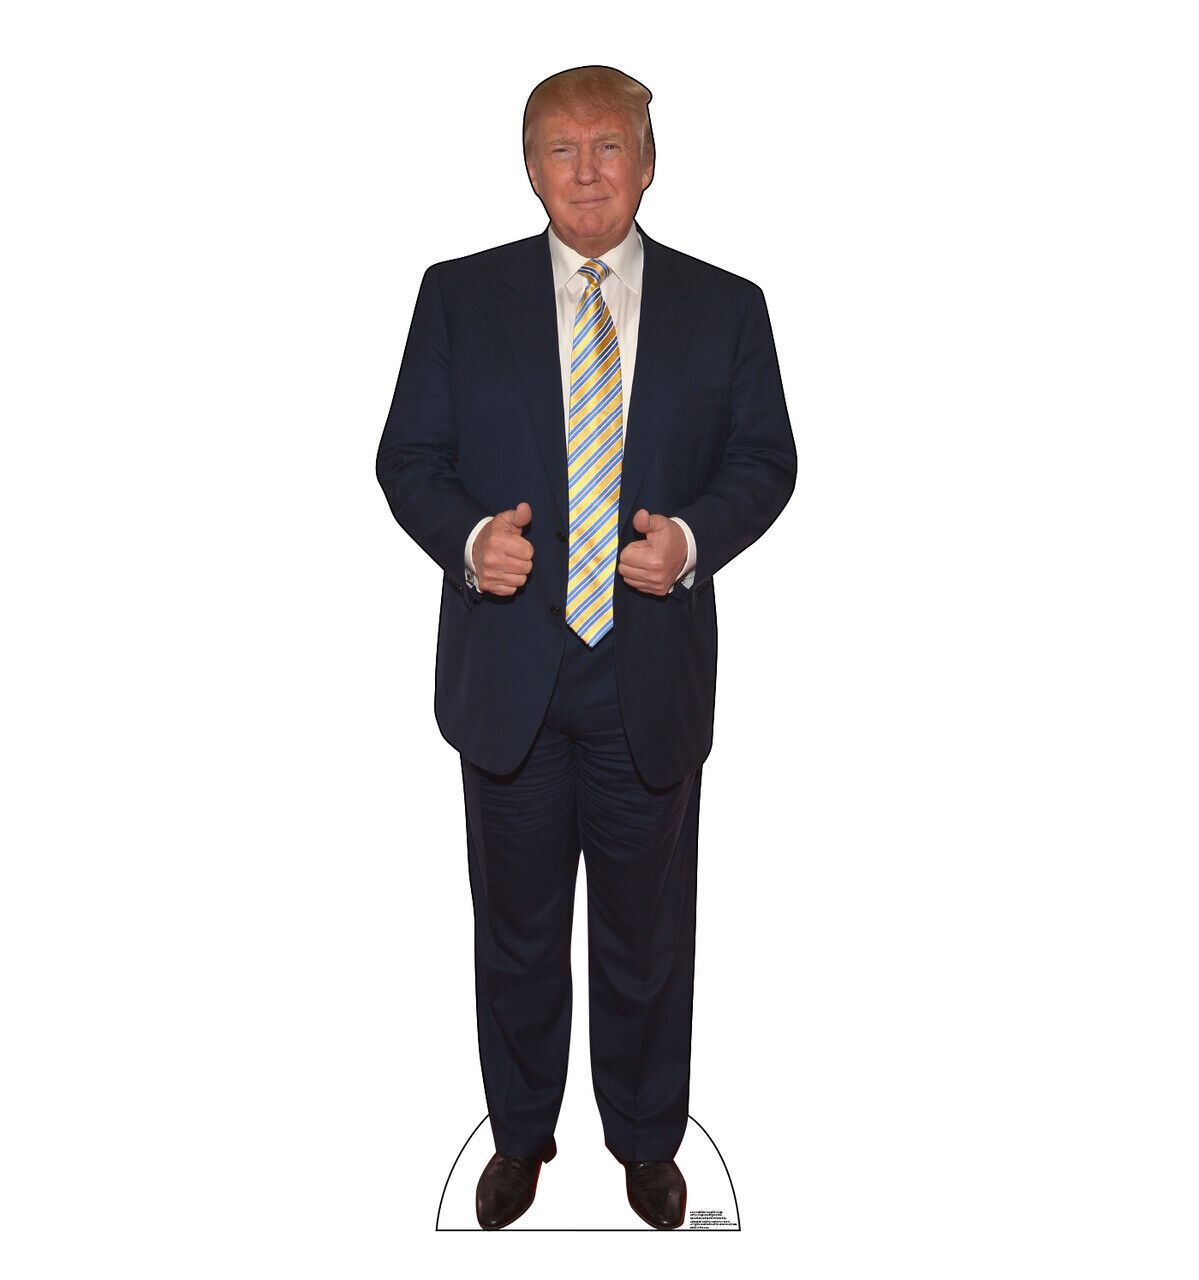 President Donald Trump Lifesize Cardboard Cutout Standups Standee Life Size